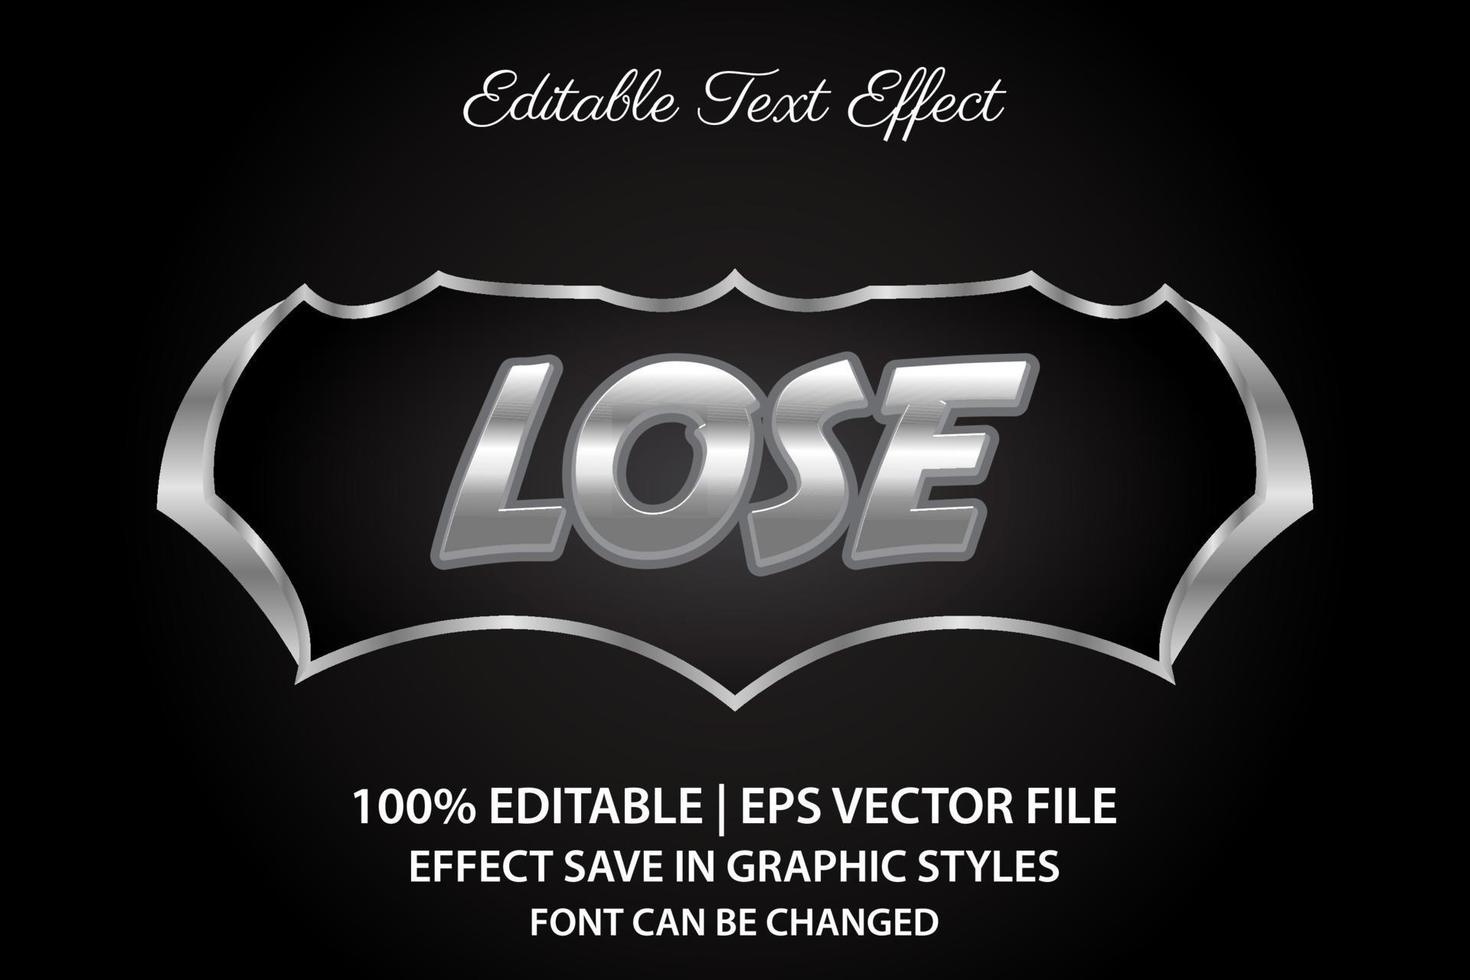 perder juego efecto de texto editable estilo 3d vector